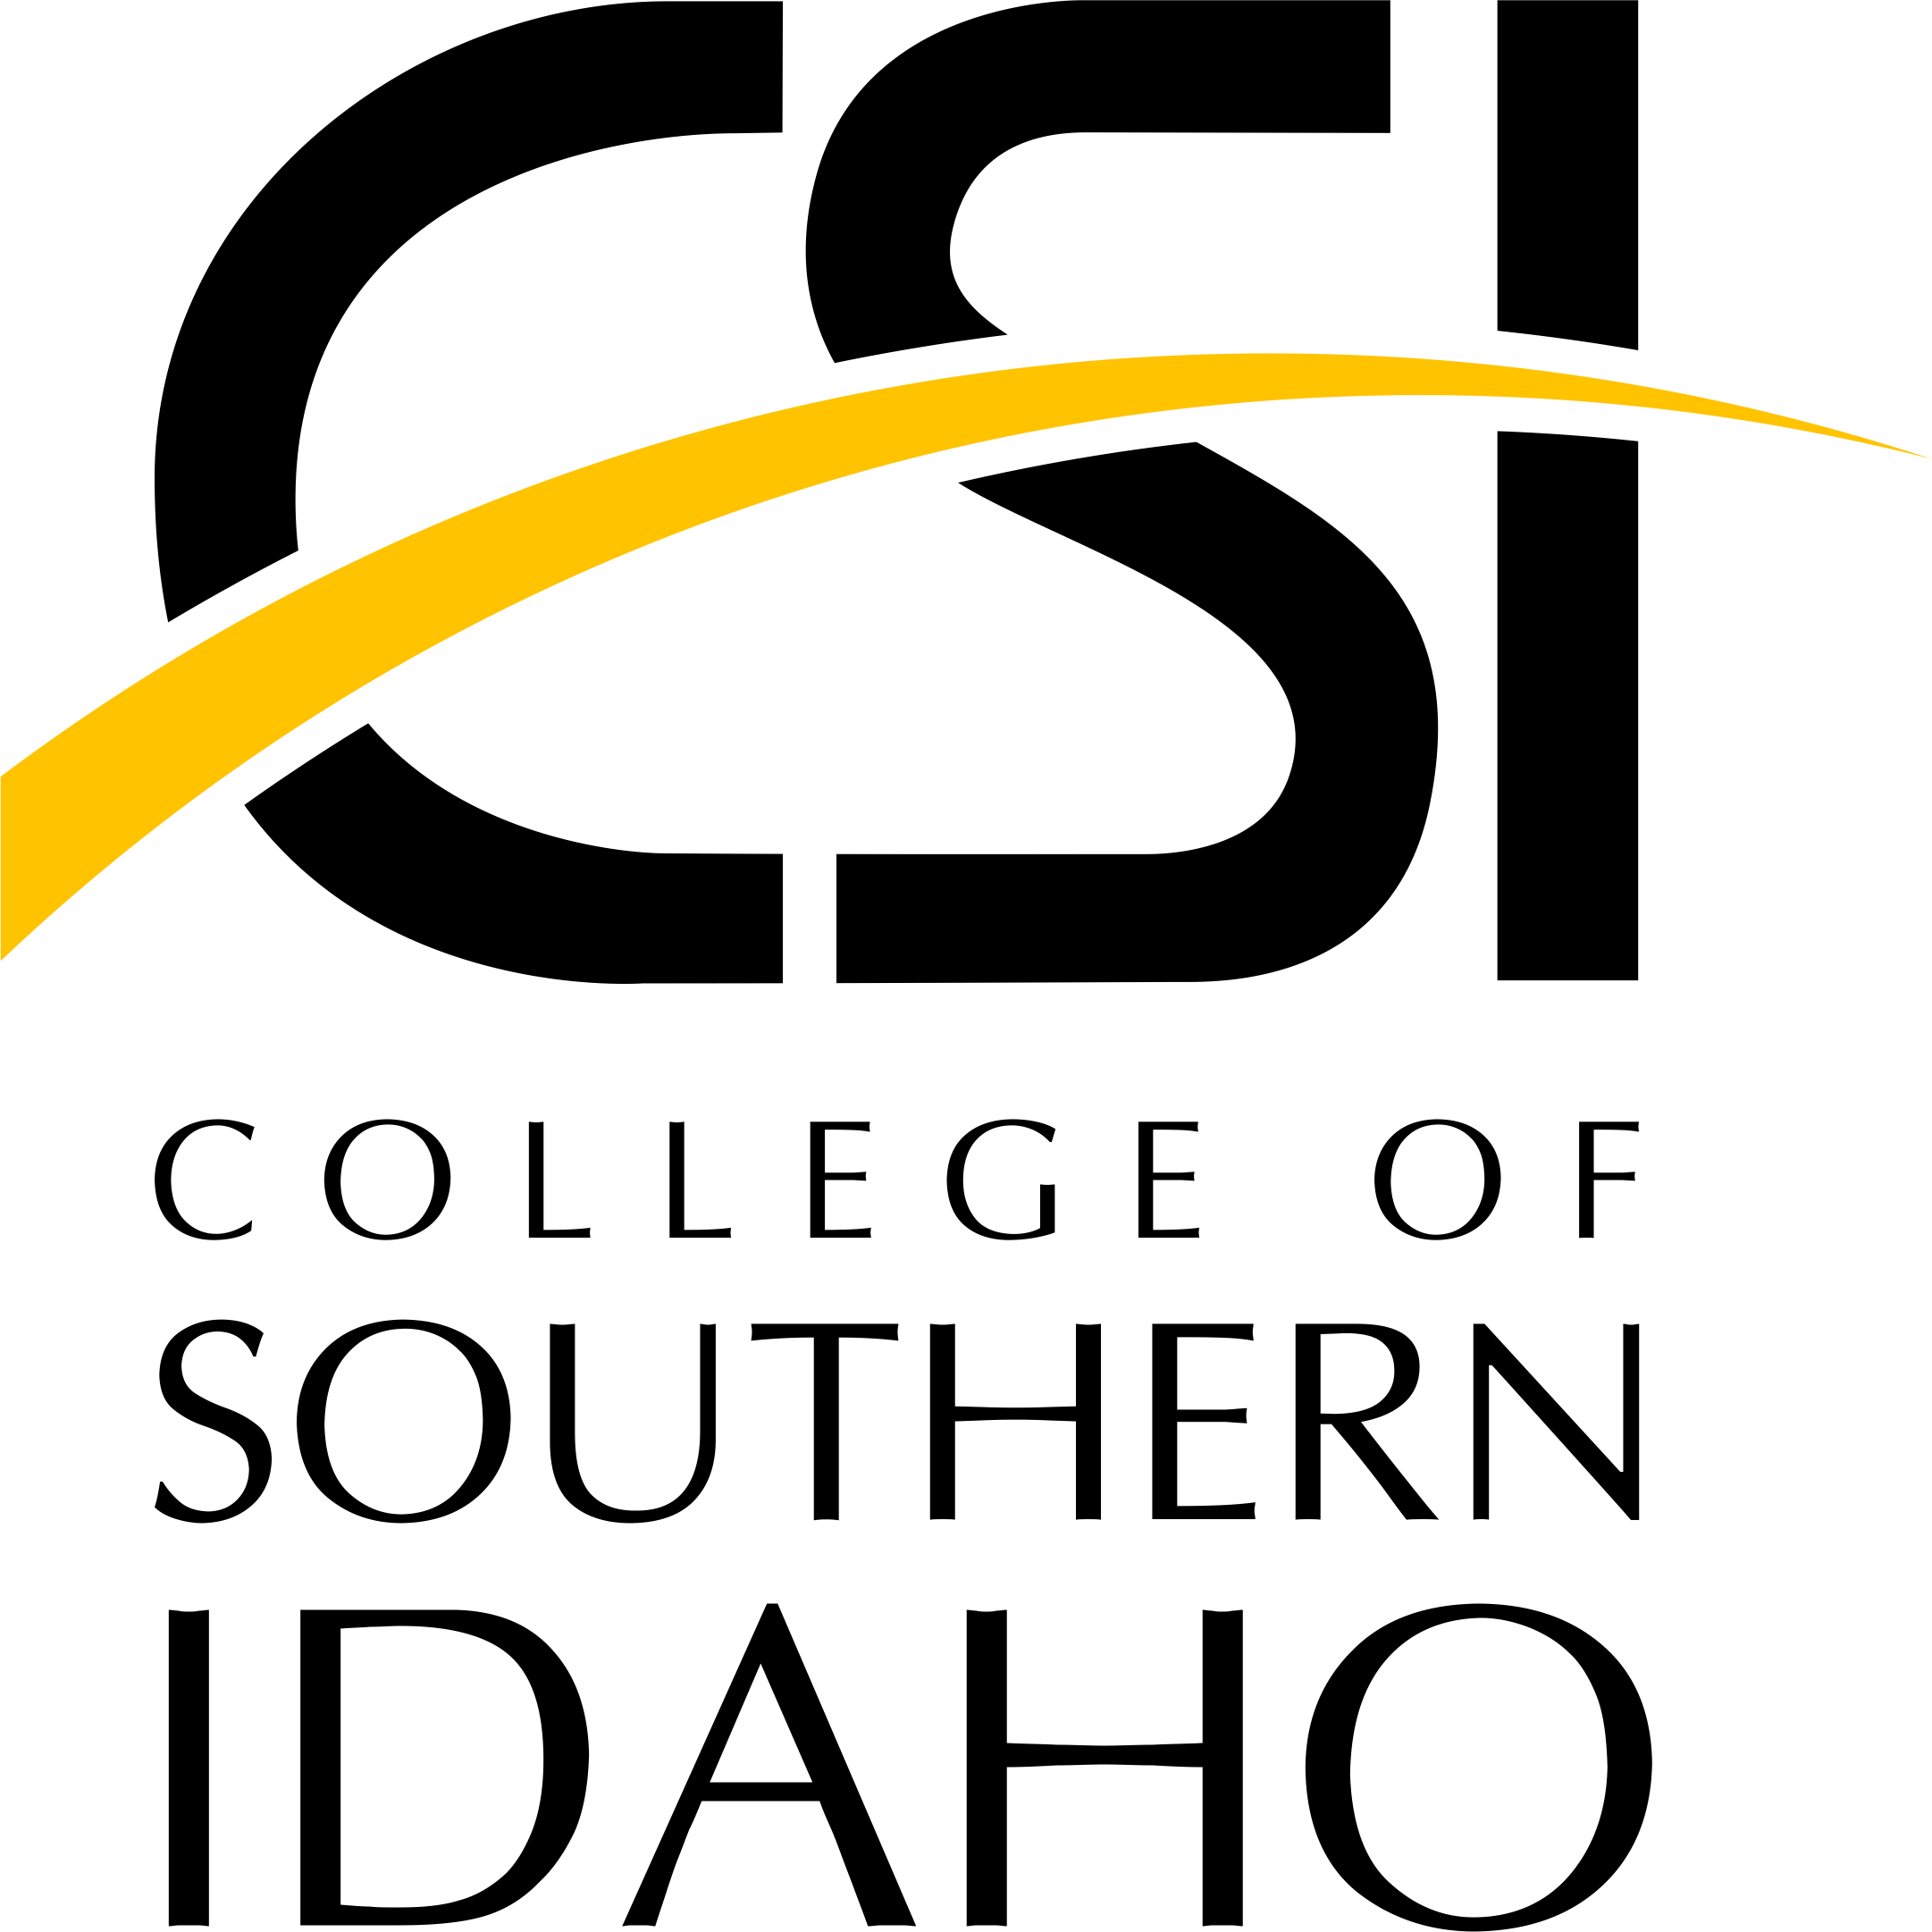 Idaho Logo - Public Information Office :: Downloadable Files